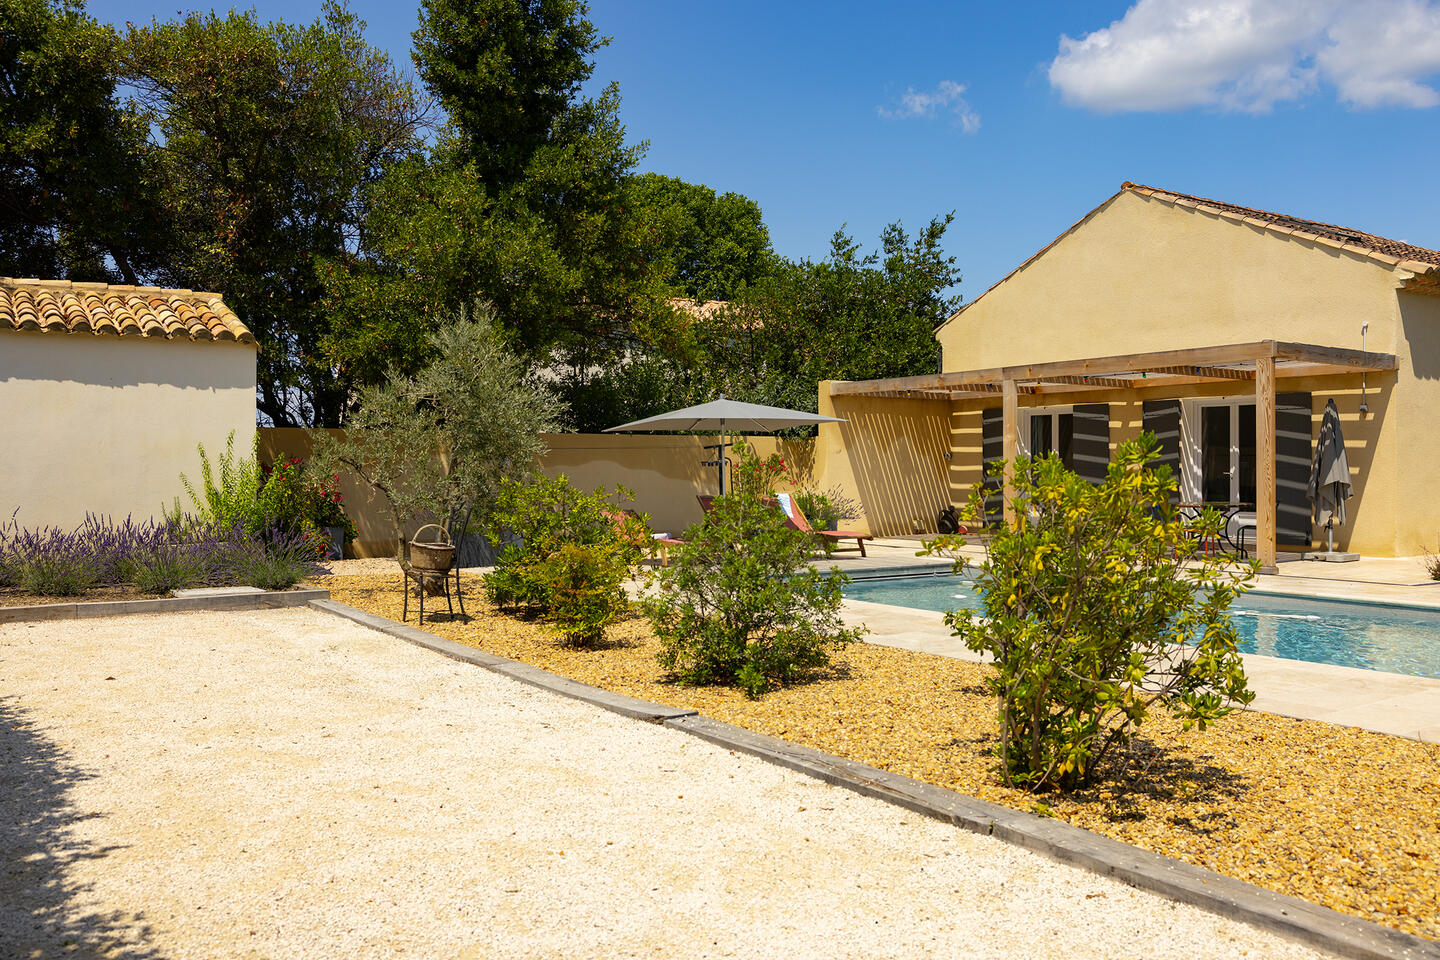 24 - La Maison de Village: Villa: Exterior - Blick auf das Gästehaus